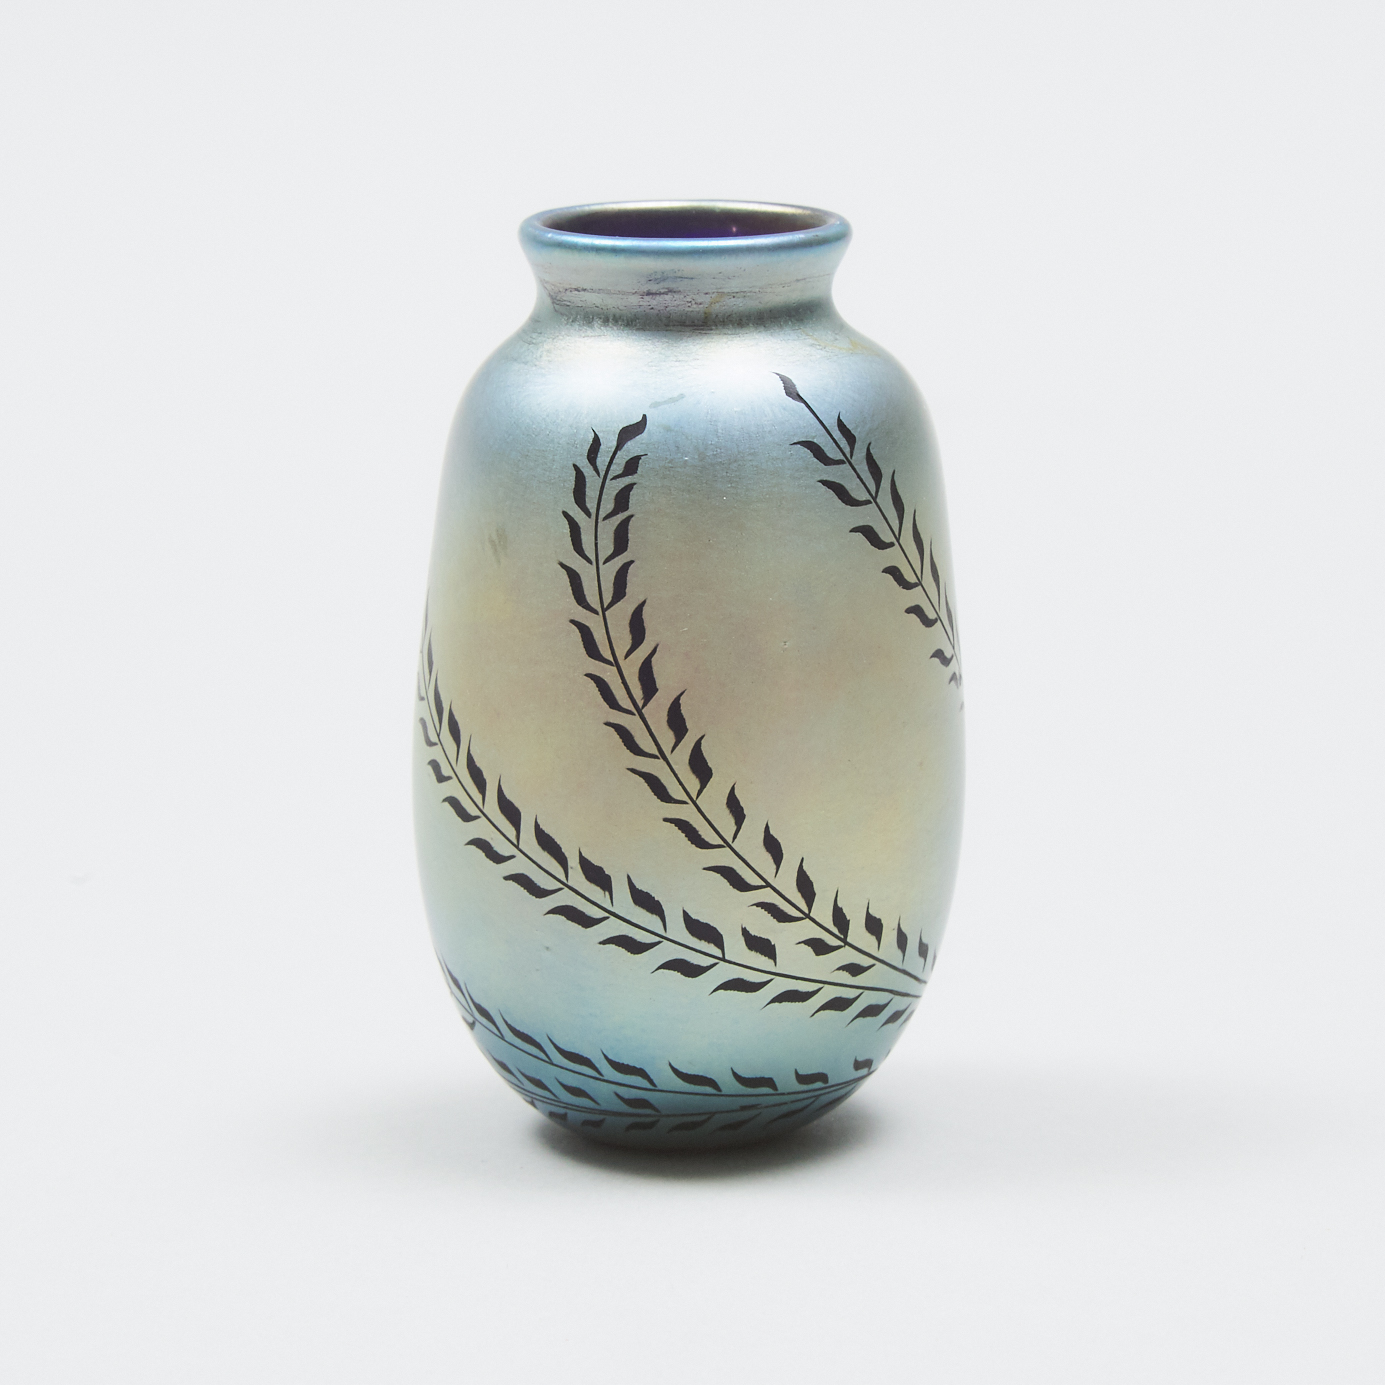 Charles Lotton (American, b.1935), Miniature Iridescent Glass Vase Engraved by Max Erlacher (Austrian, b.1933), 1975